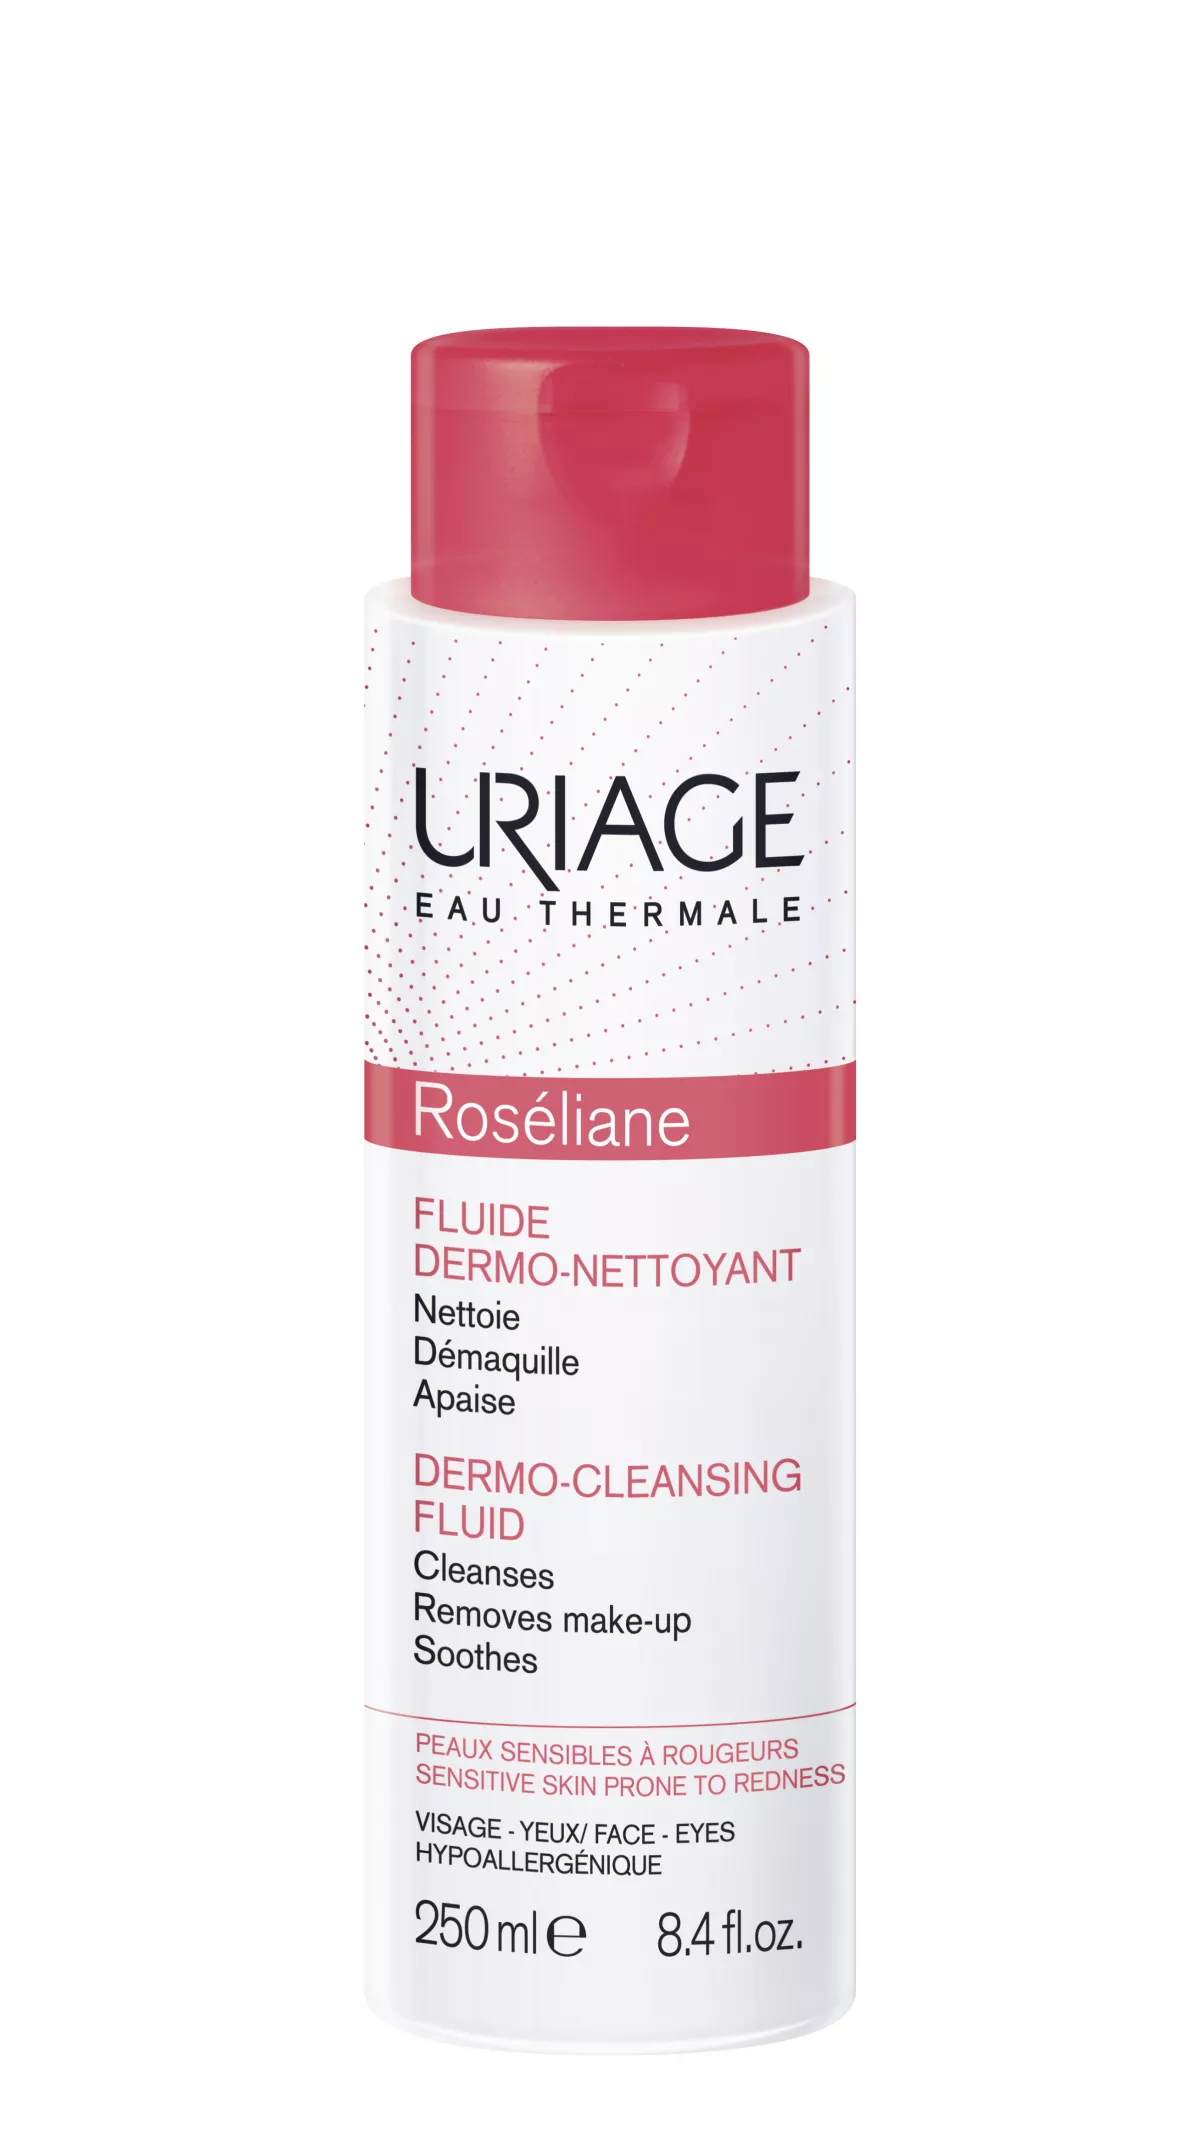 Uriage Roseliane fluid de curatare anti-roseata 250ml, [],epastila.ro